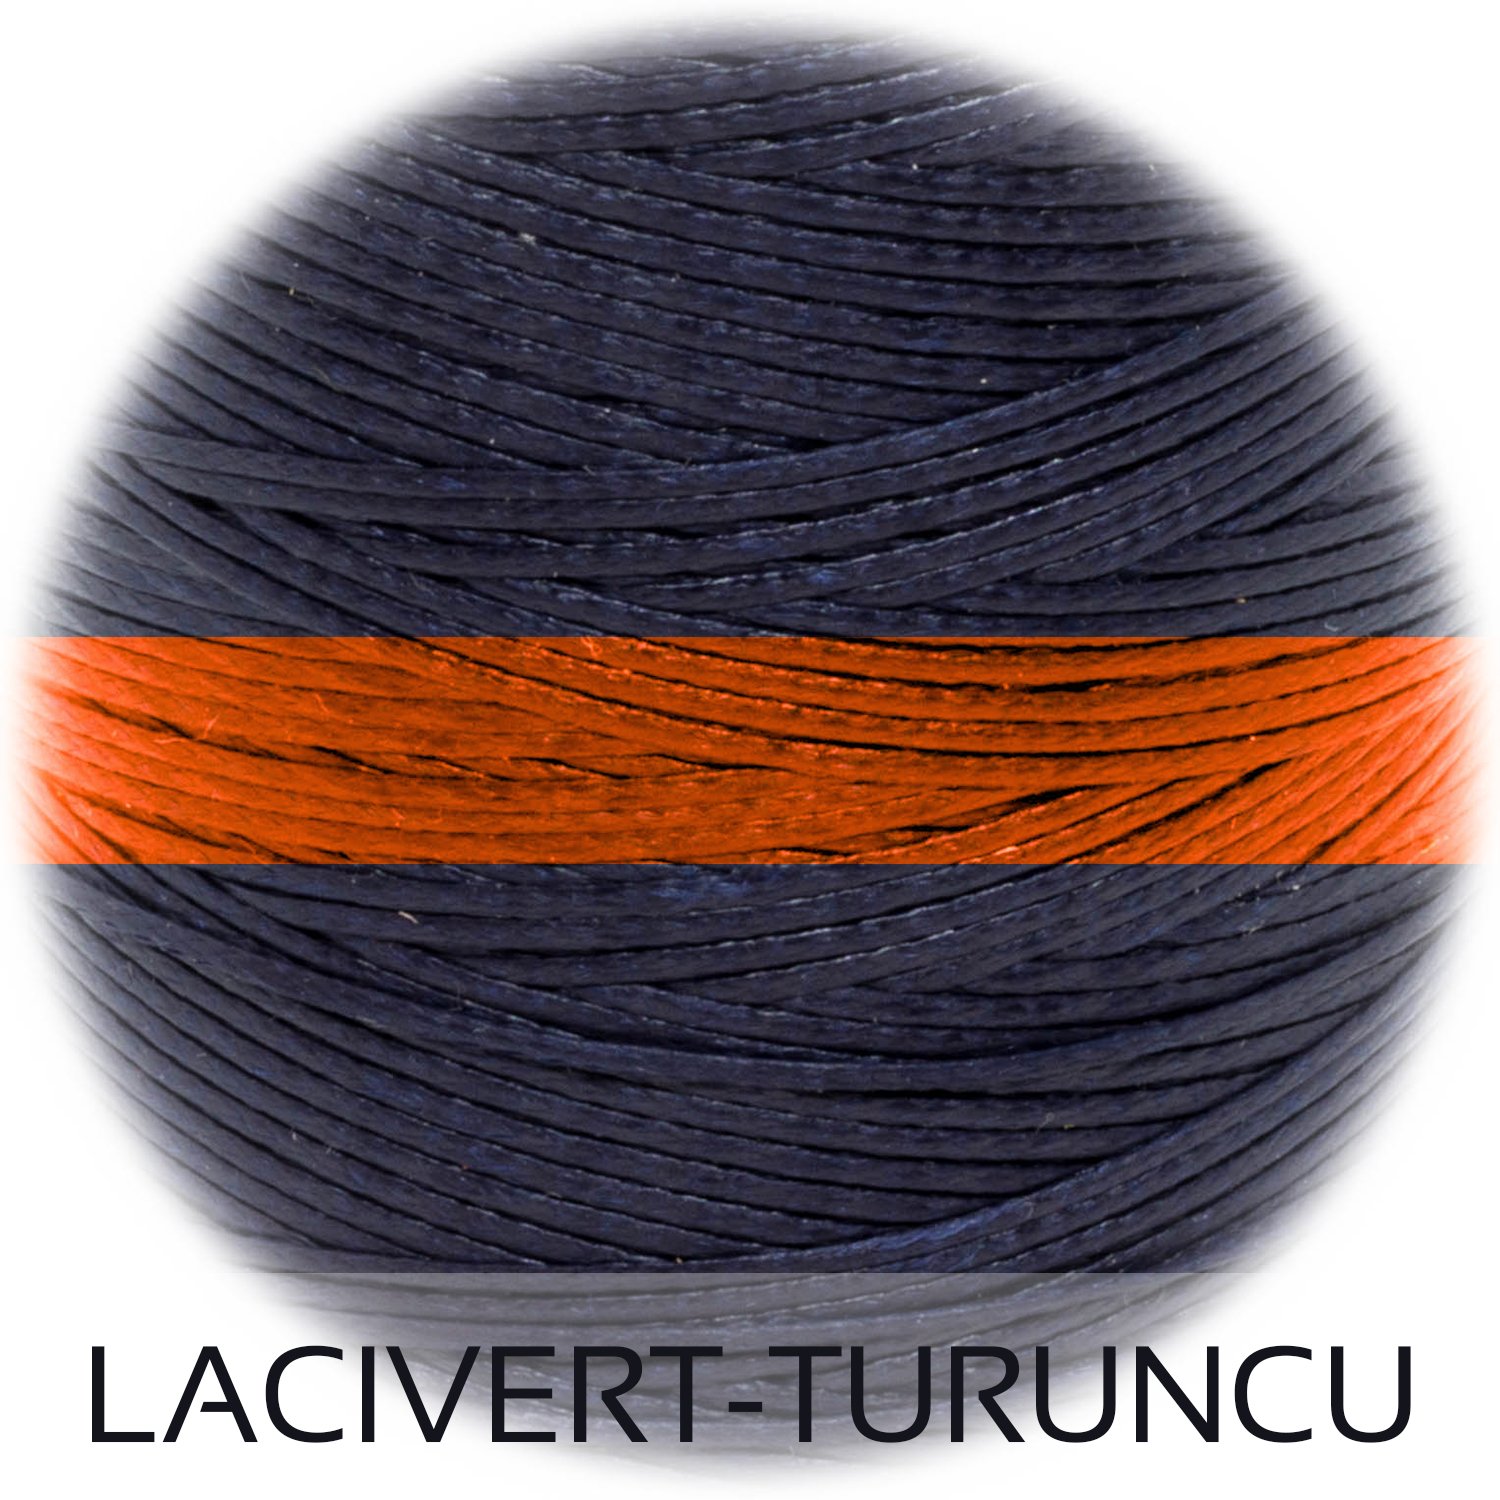 Lacivert-Turuncu